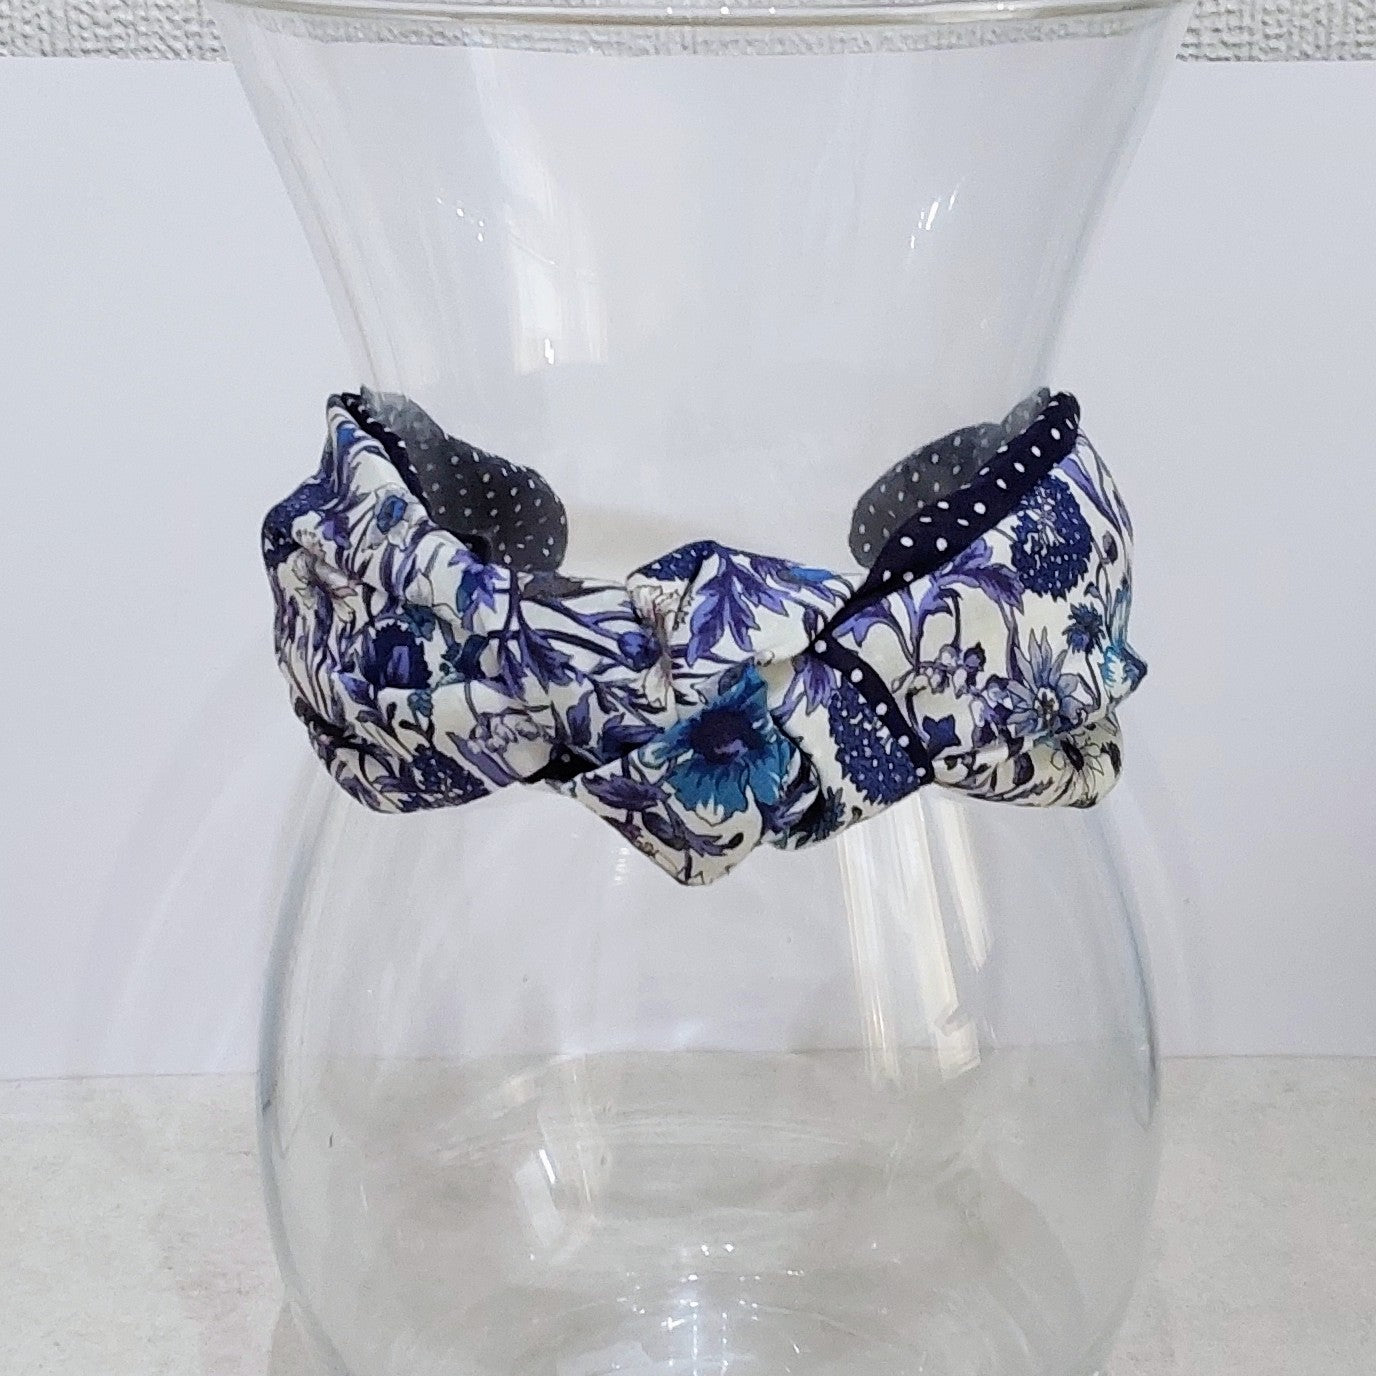 Hairband Liberty of London Rachel Blue Floral Cotton Fabric Bespoke Top Knot Headband